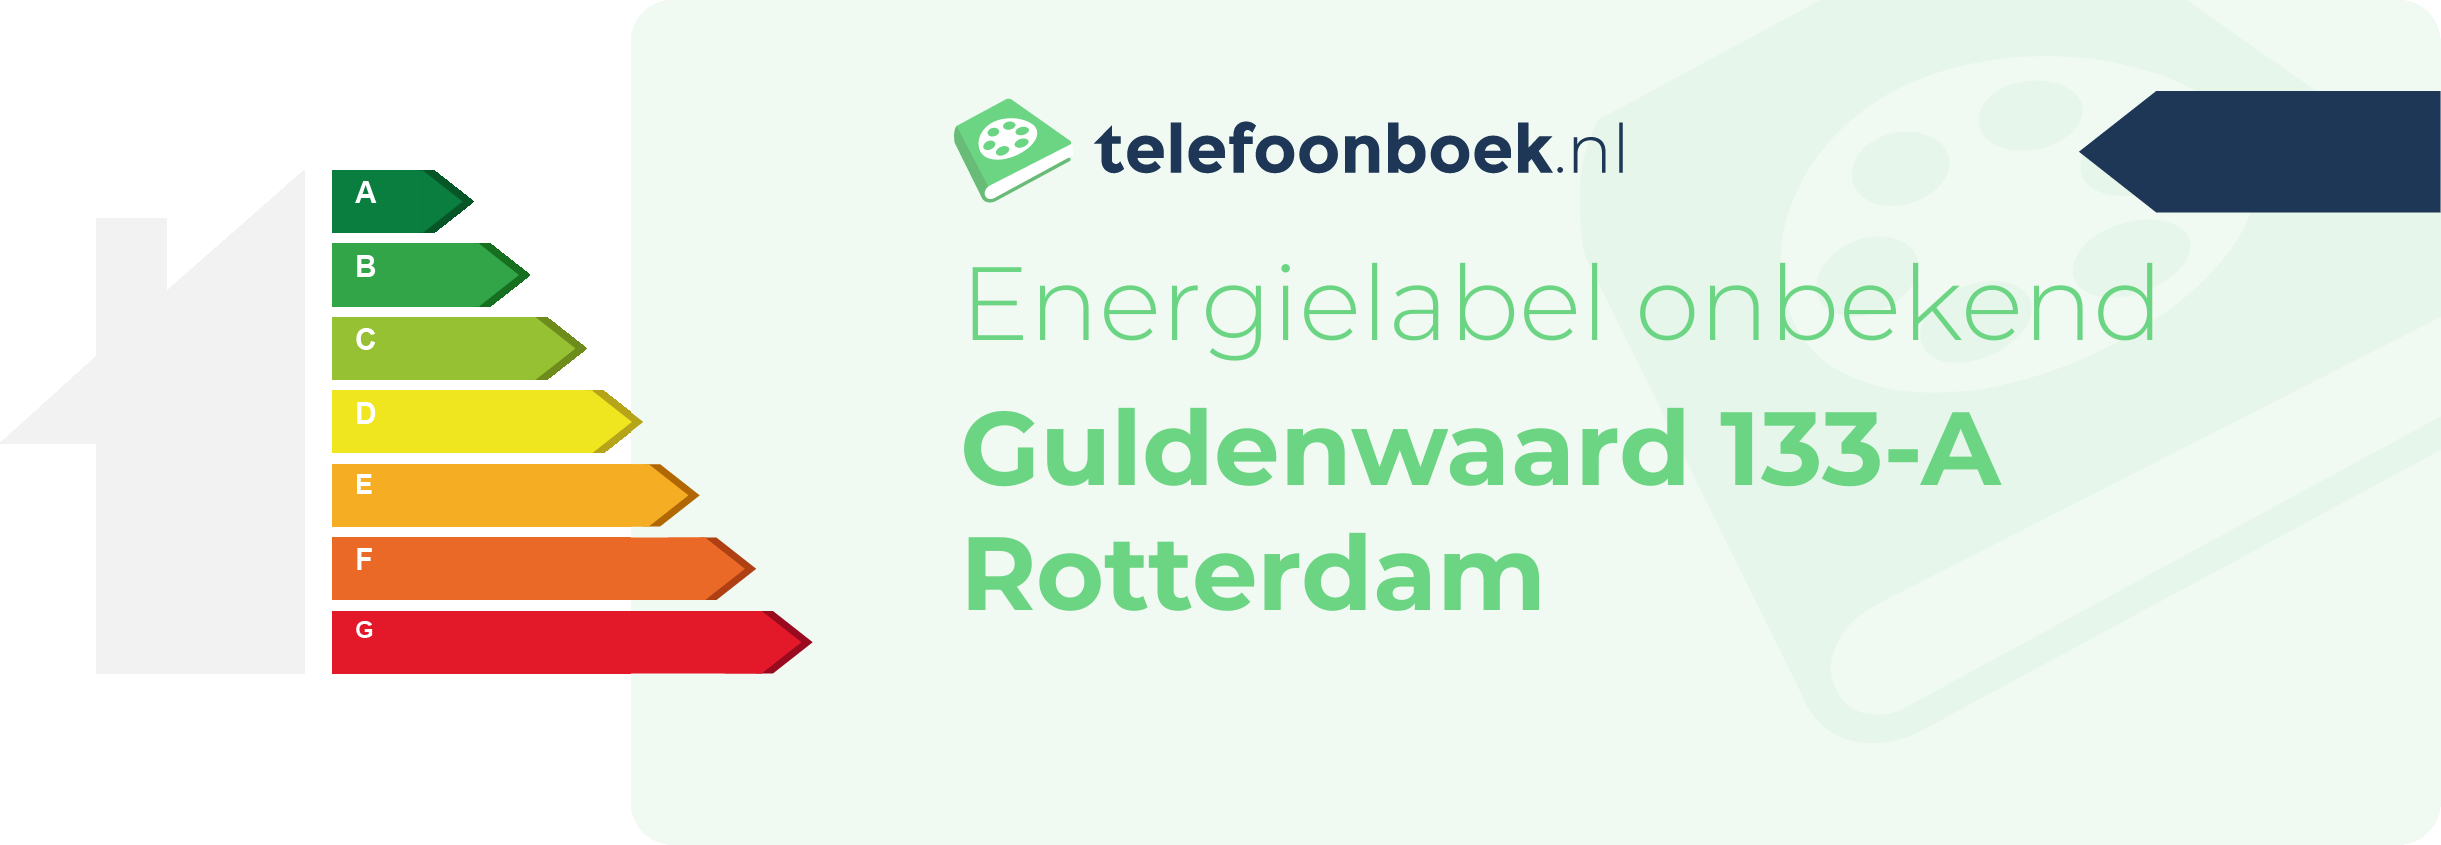 Energielabel Guldenwaard 133-A Rotterdam